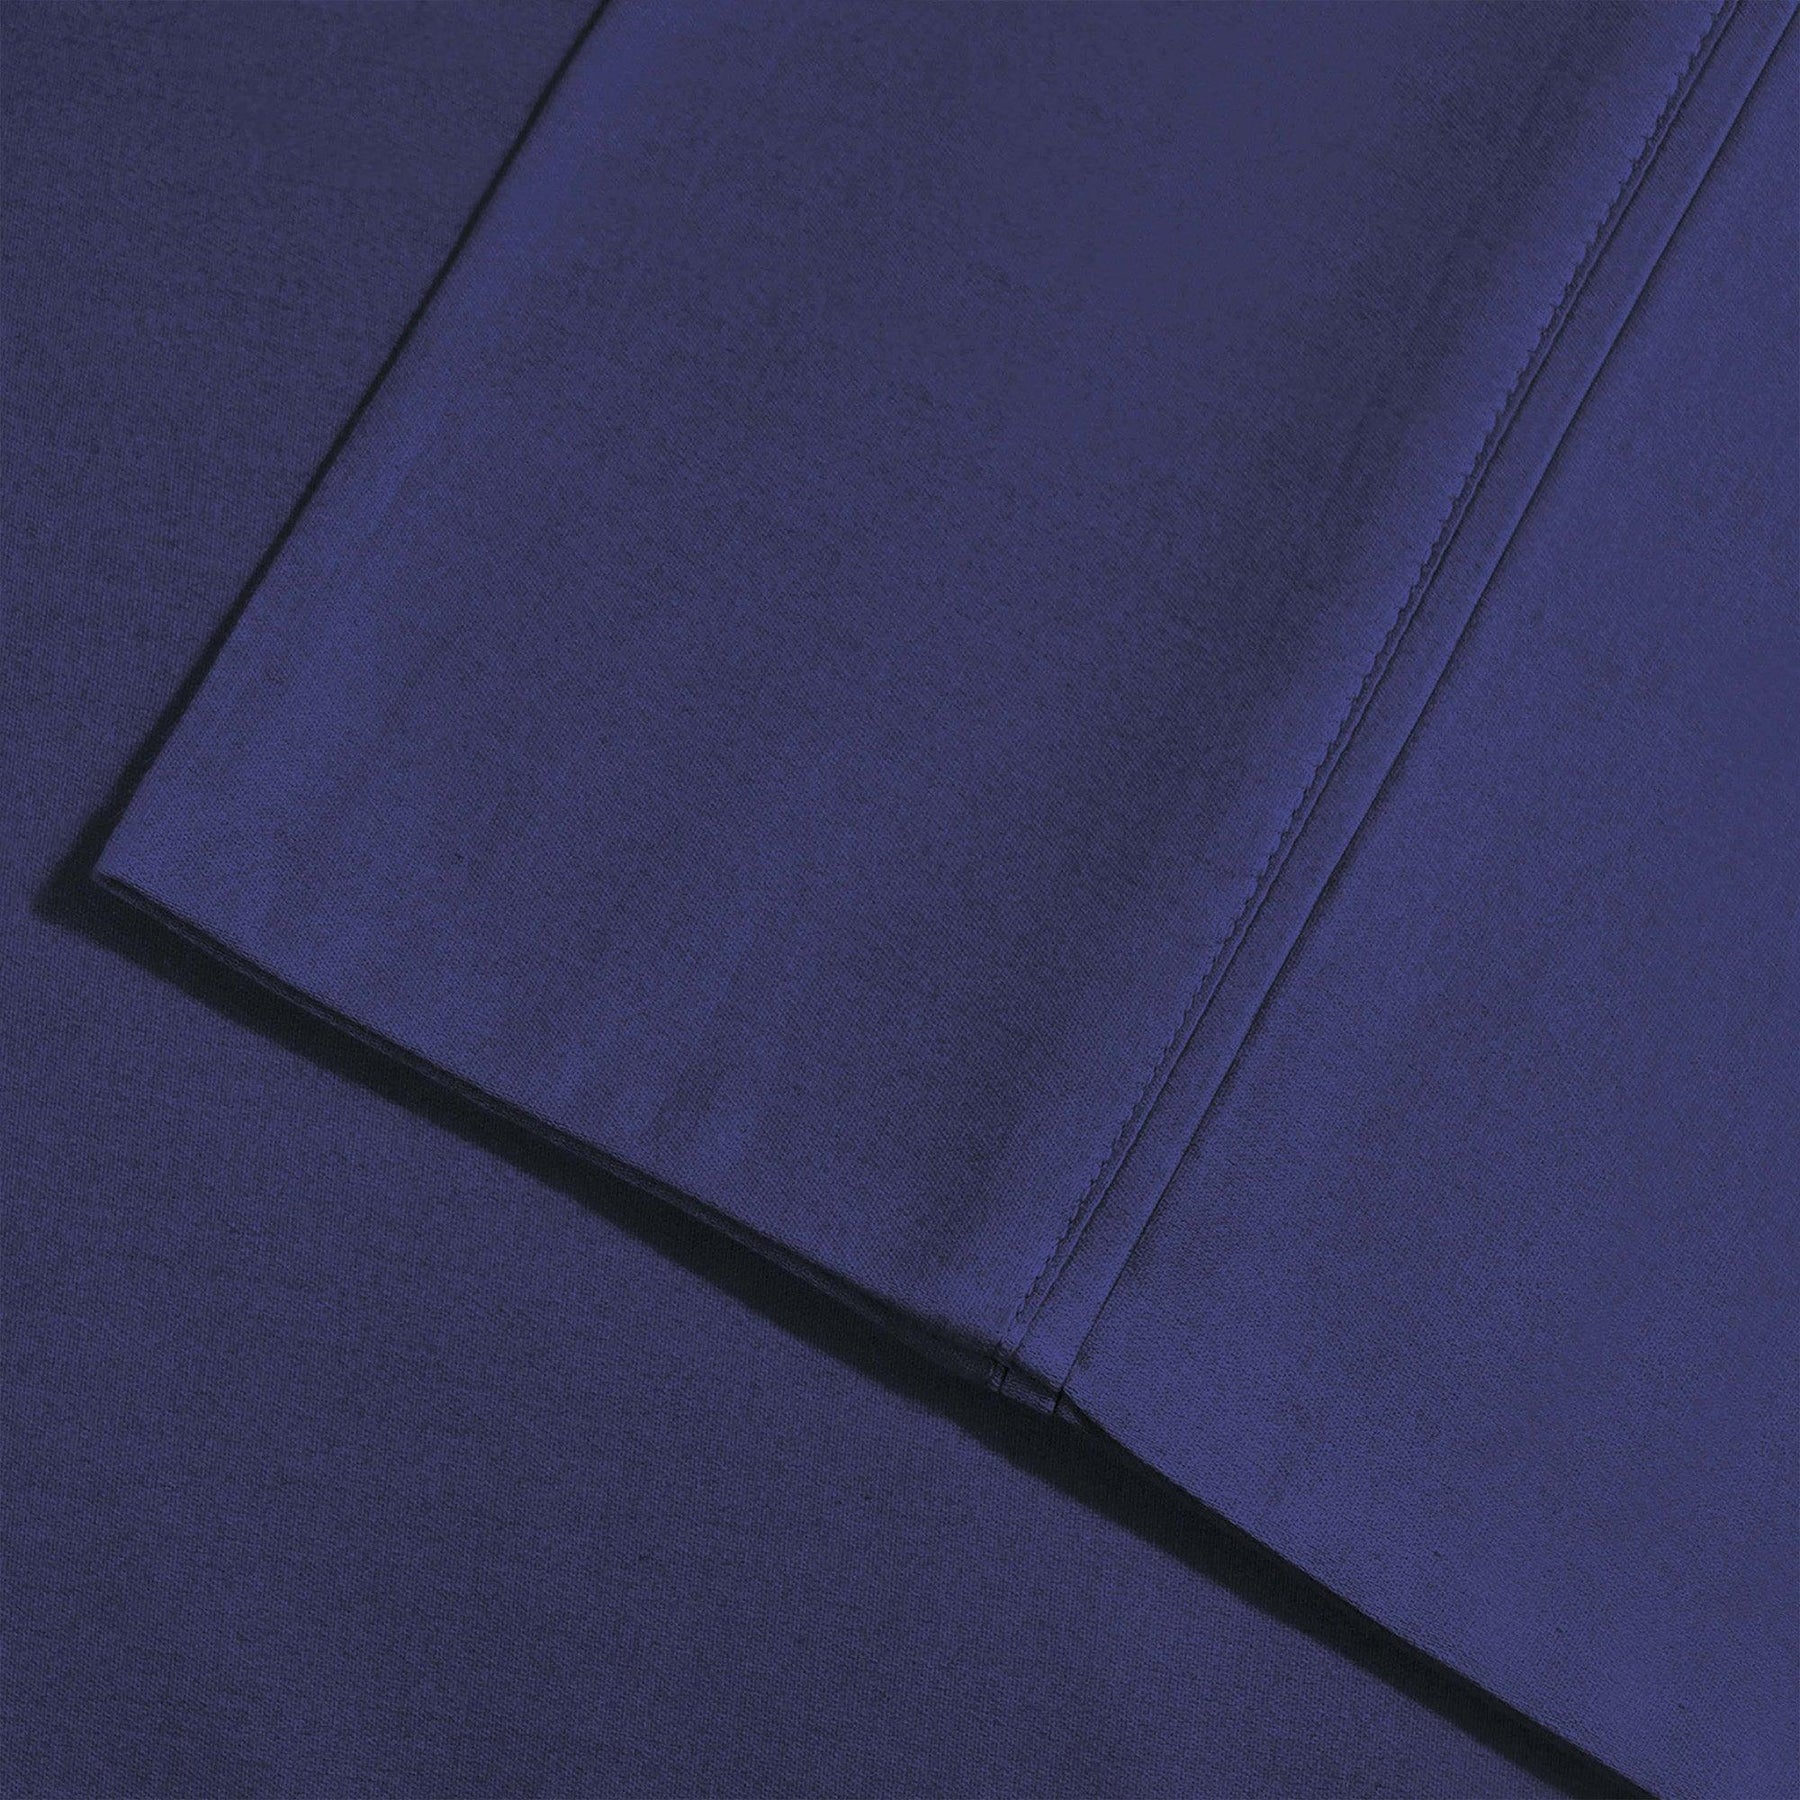 Premium Plush 800 Thread Count Solid Deep Pocket Cotton Blend Bed Sheet Set-Sheet Set by Superior-Home City Inc